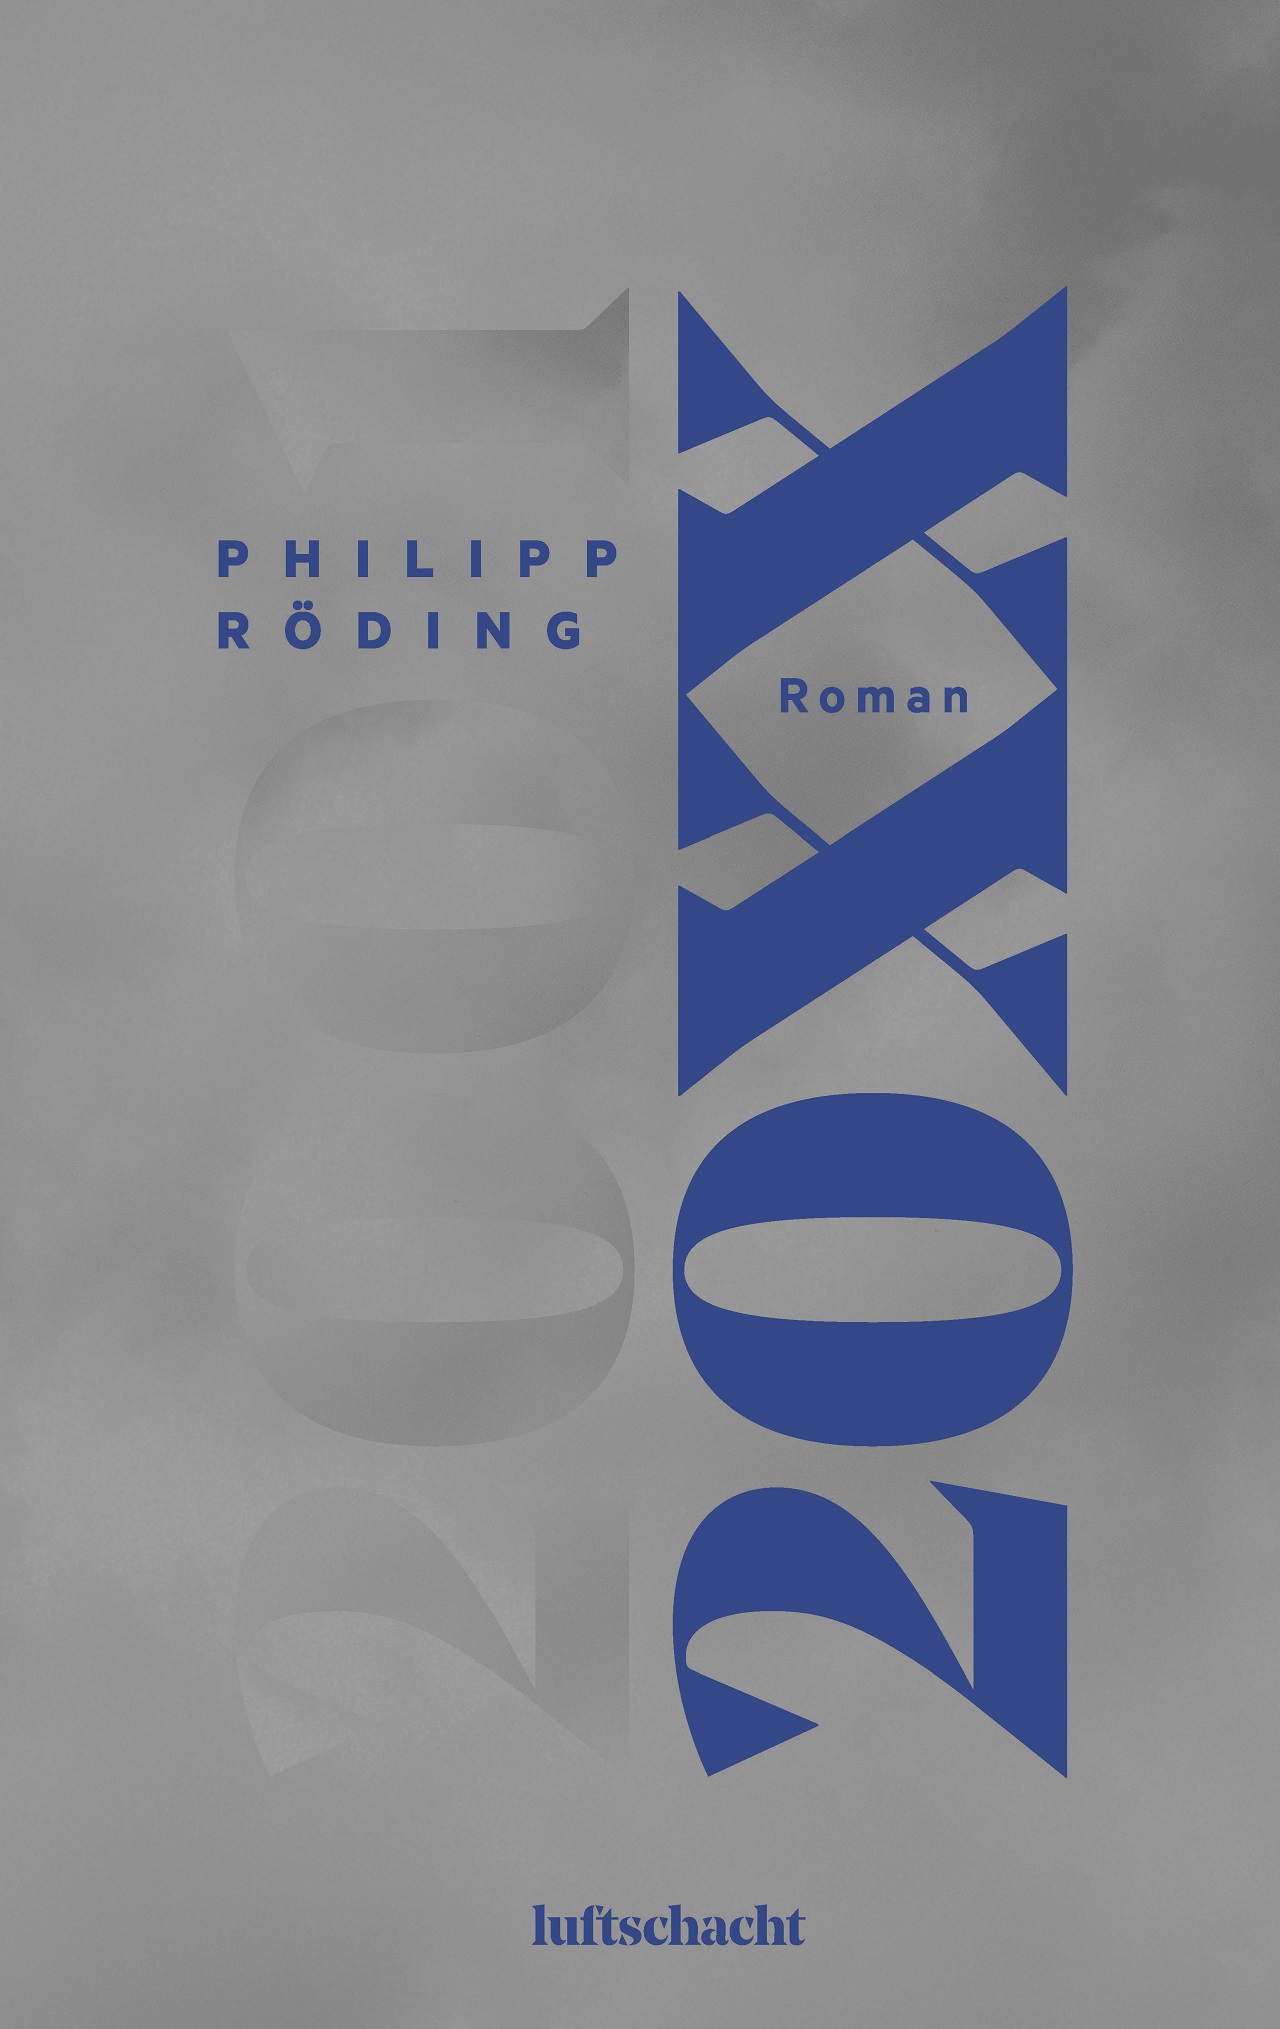 Das Buchcover zu Philipp Rödings Roman "20XX"